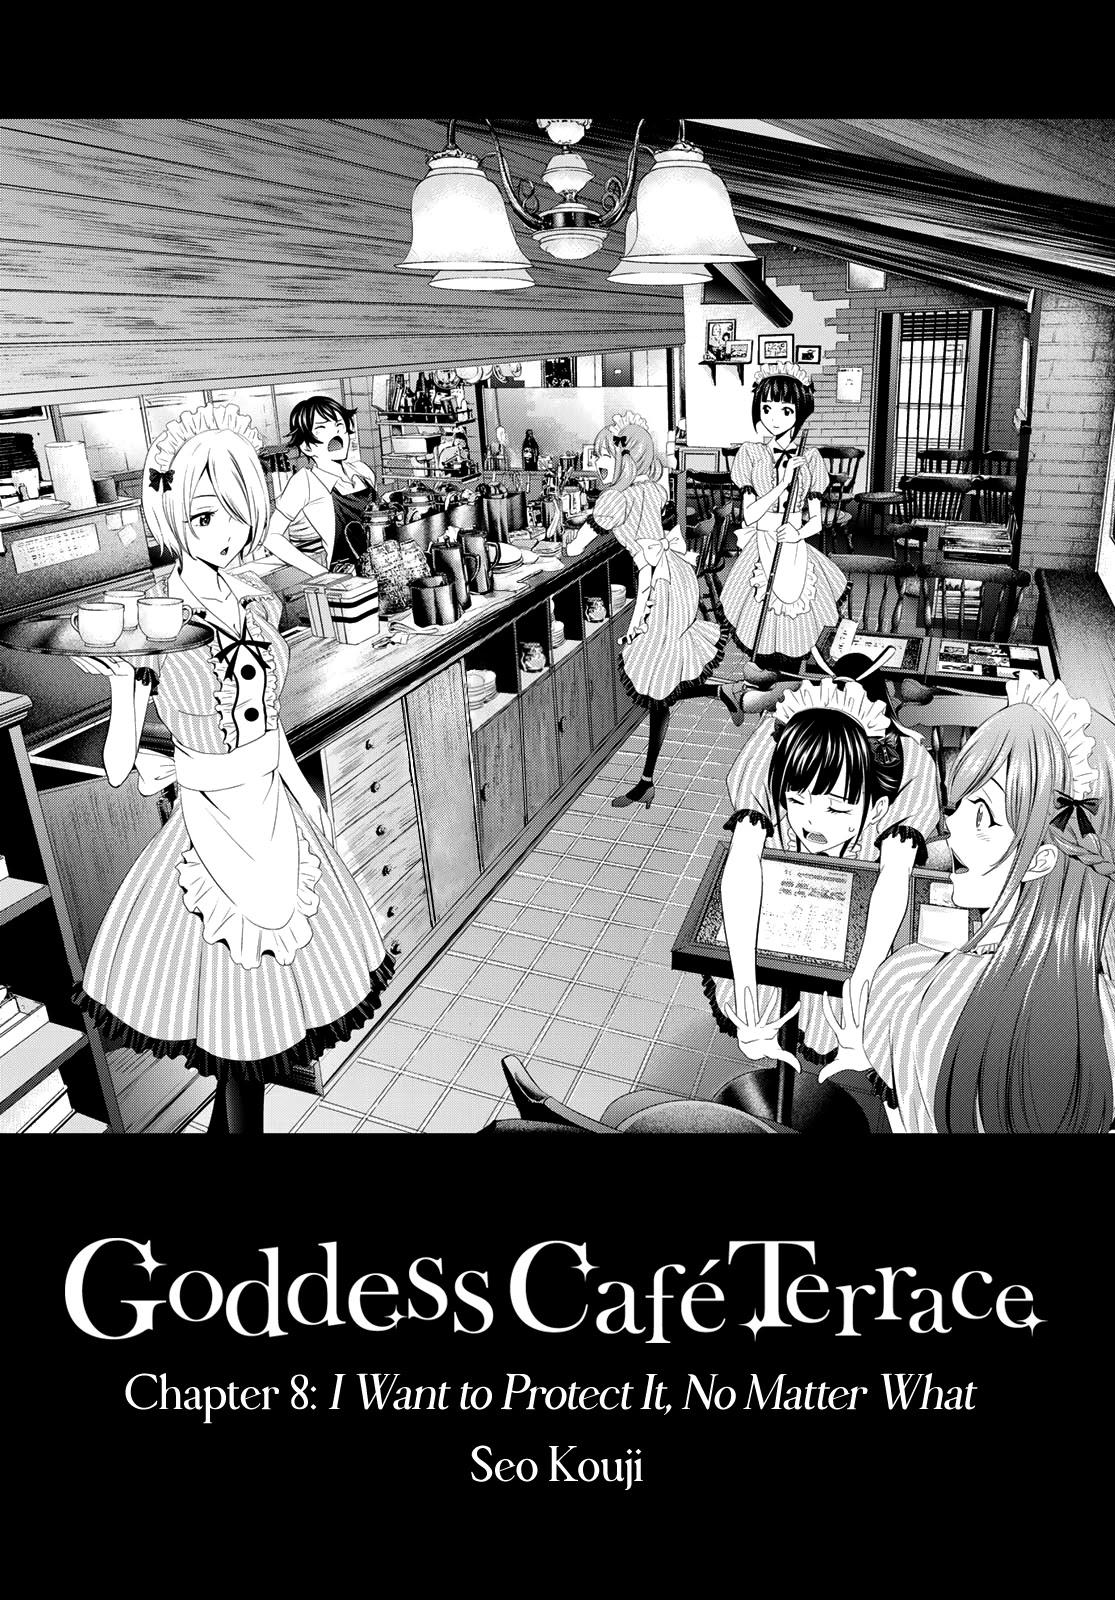 Megami no cafe terrace 8 comic manga anime Koji Seo Goddess Japanese Book